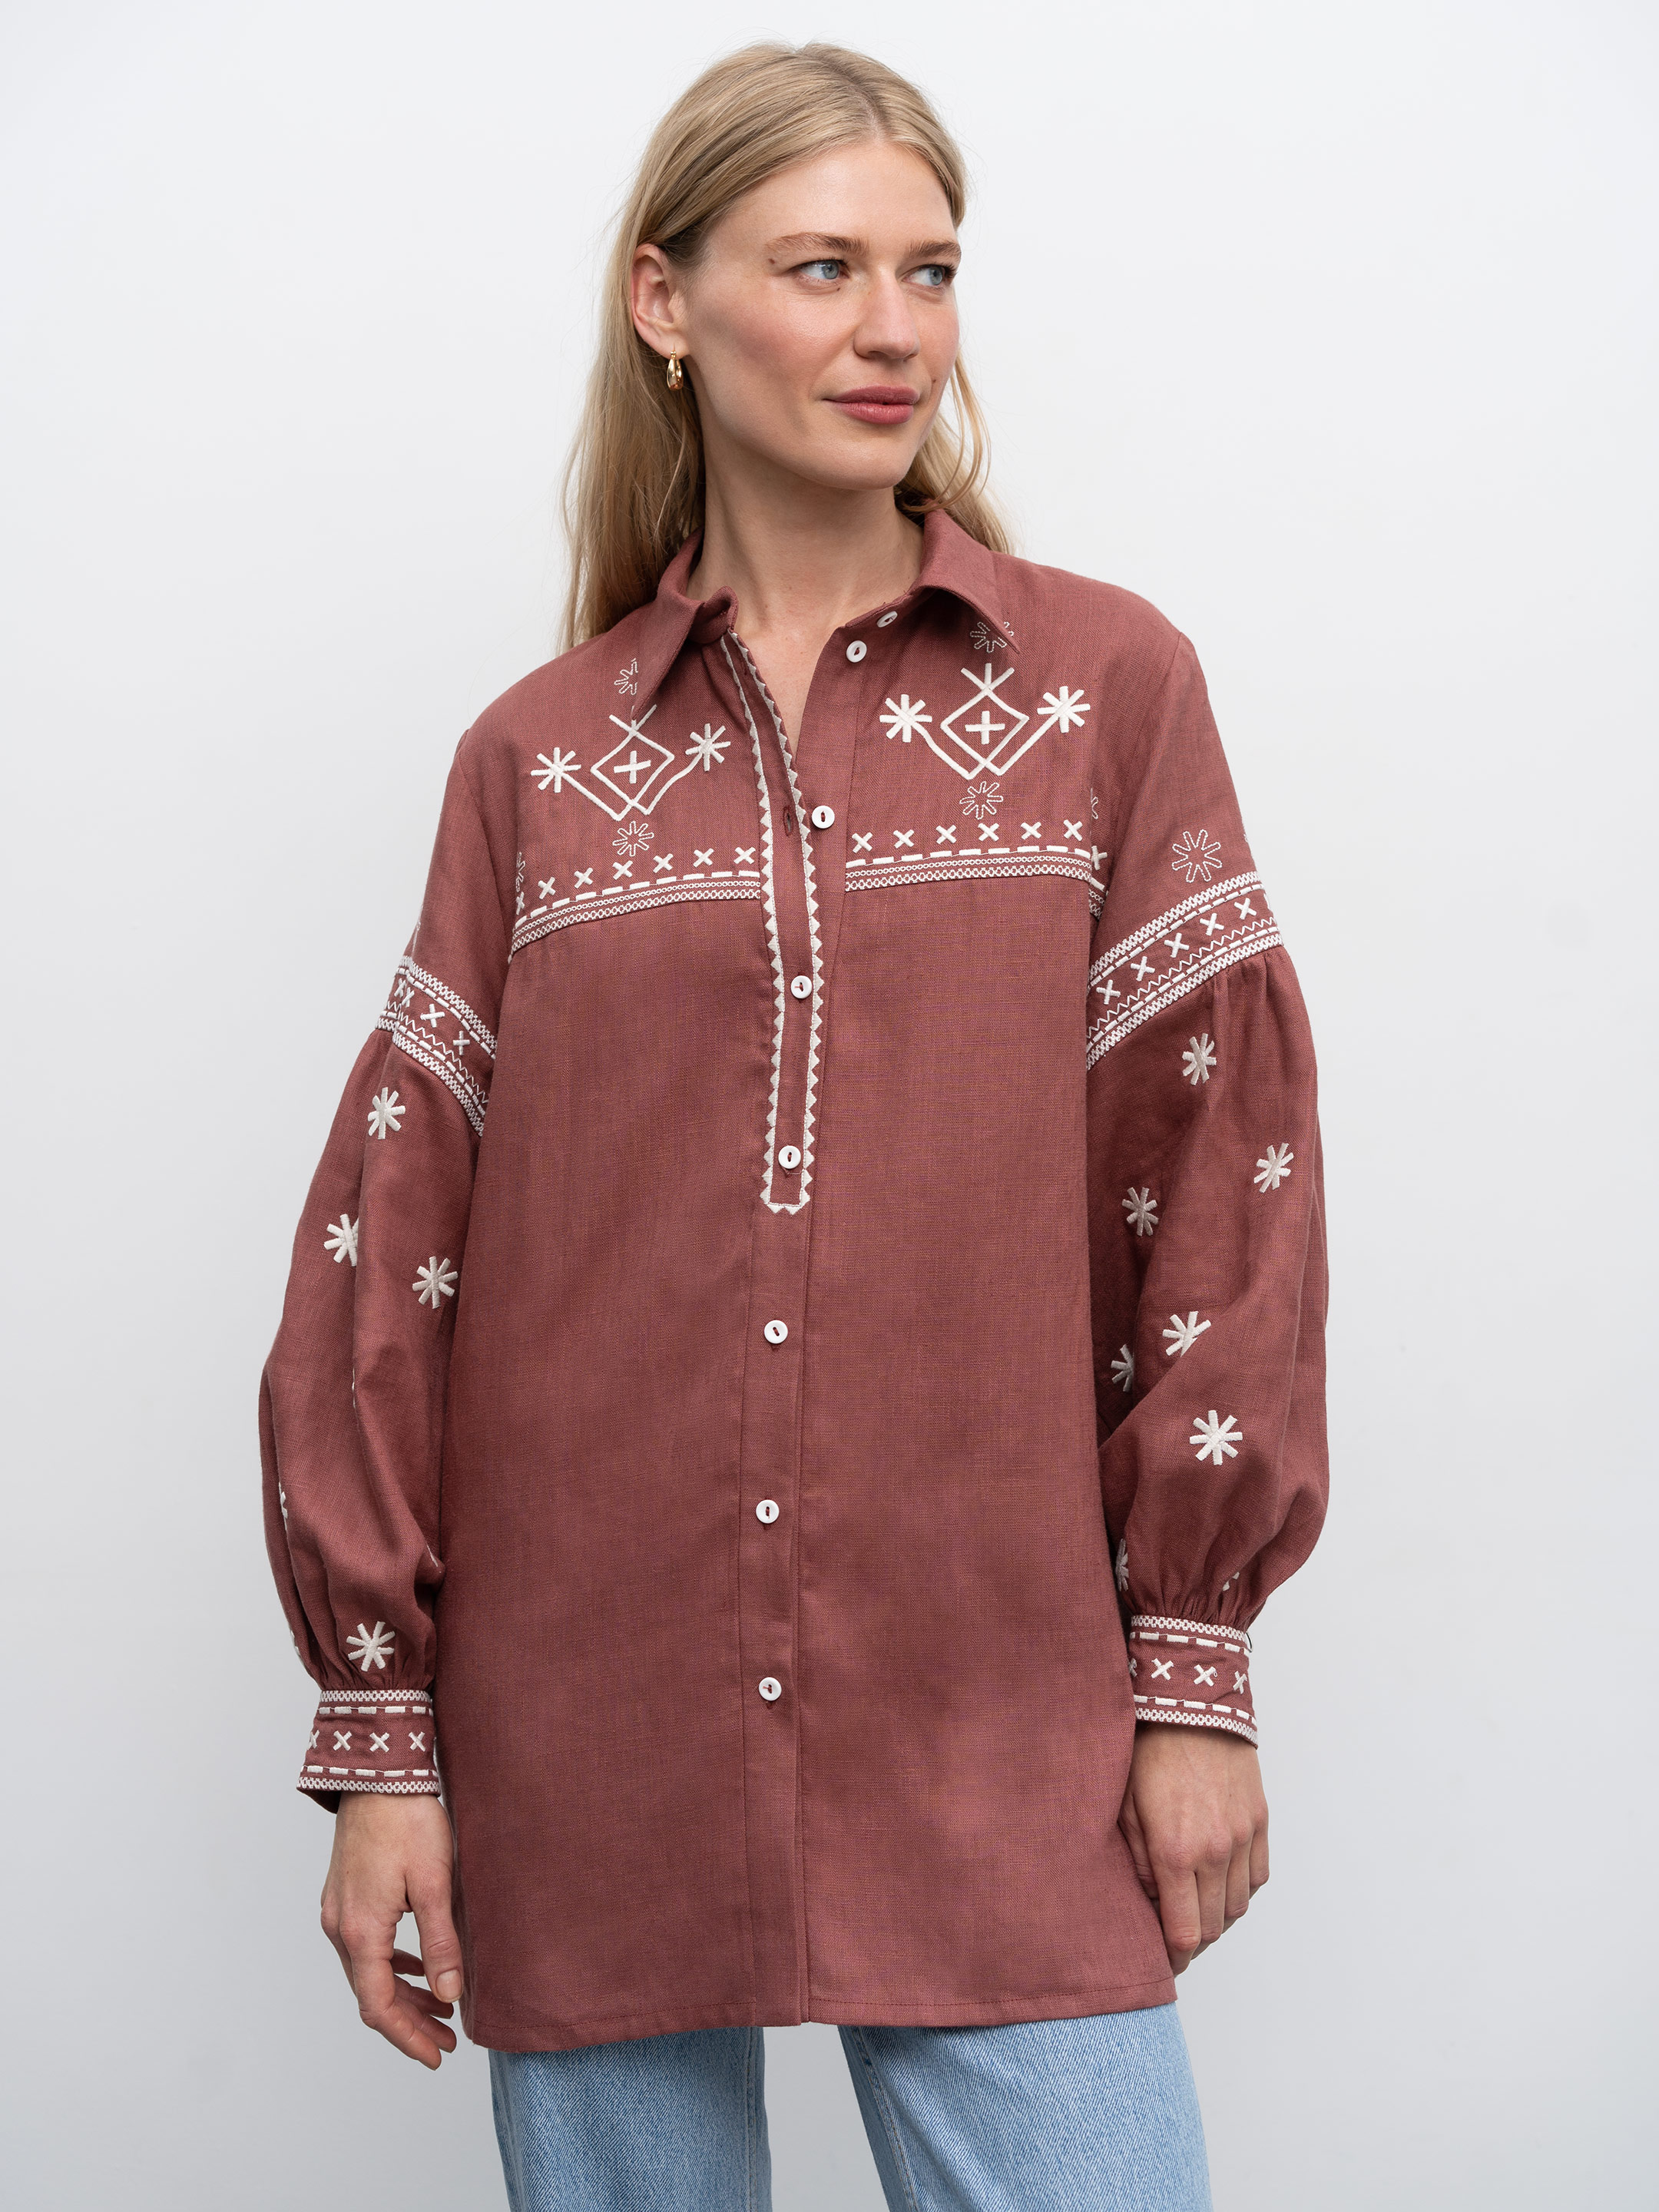 Terracotta linen shirt with embroidery Tsvit Tera - photo 1